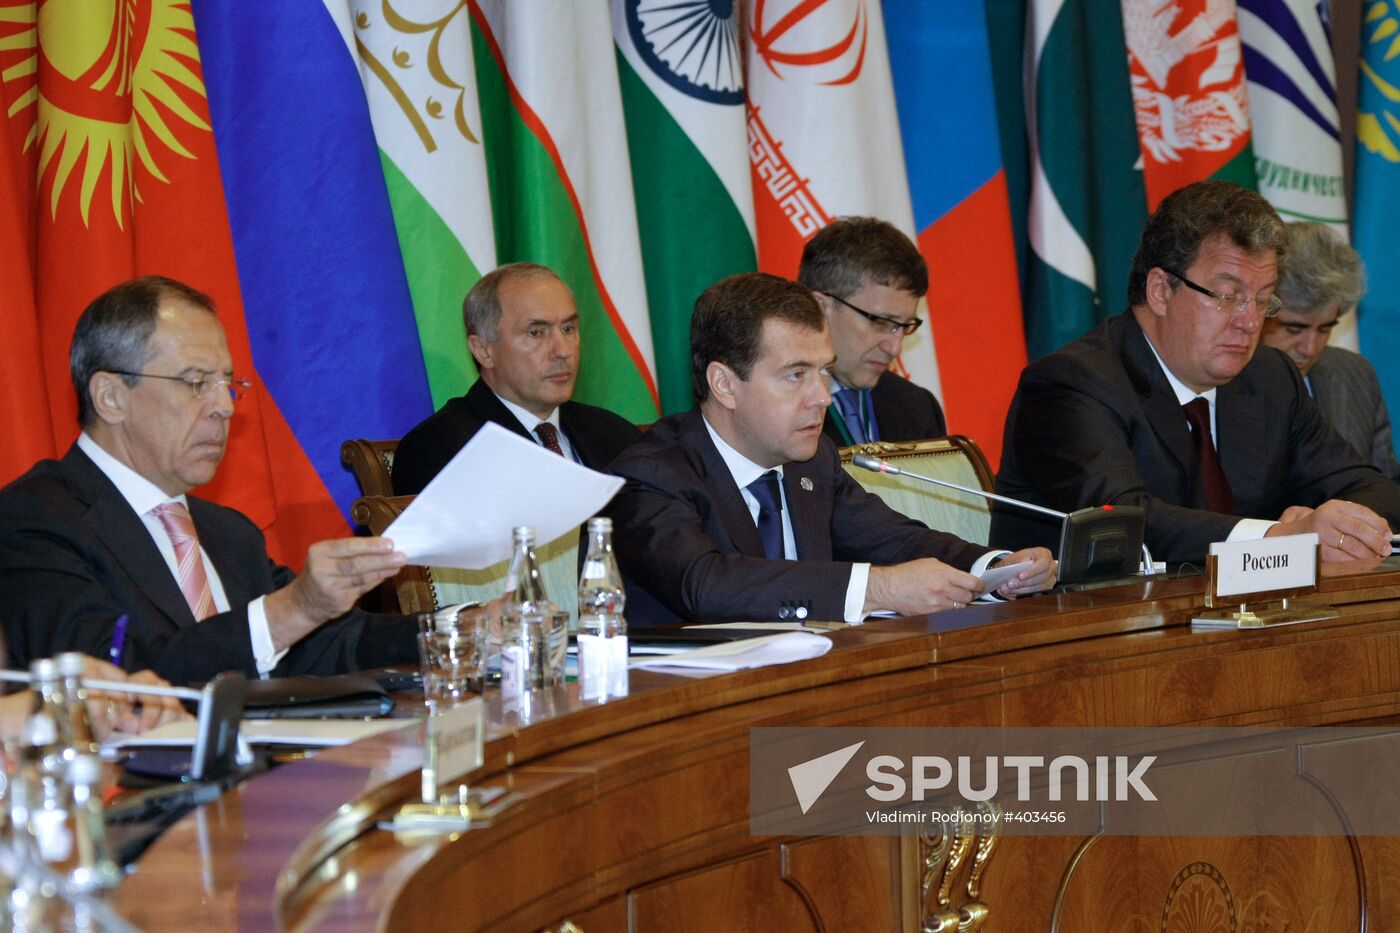 SCO summit in Yekaterinburg, day two